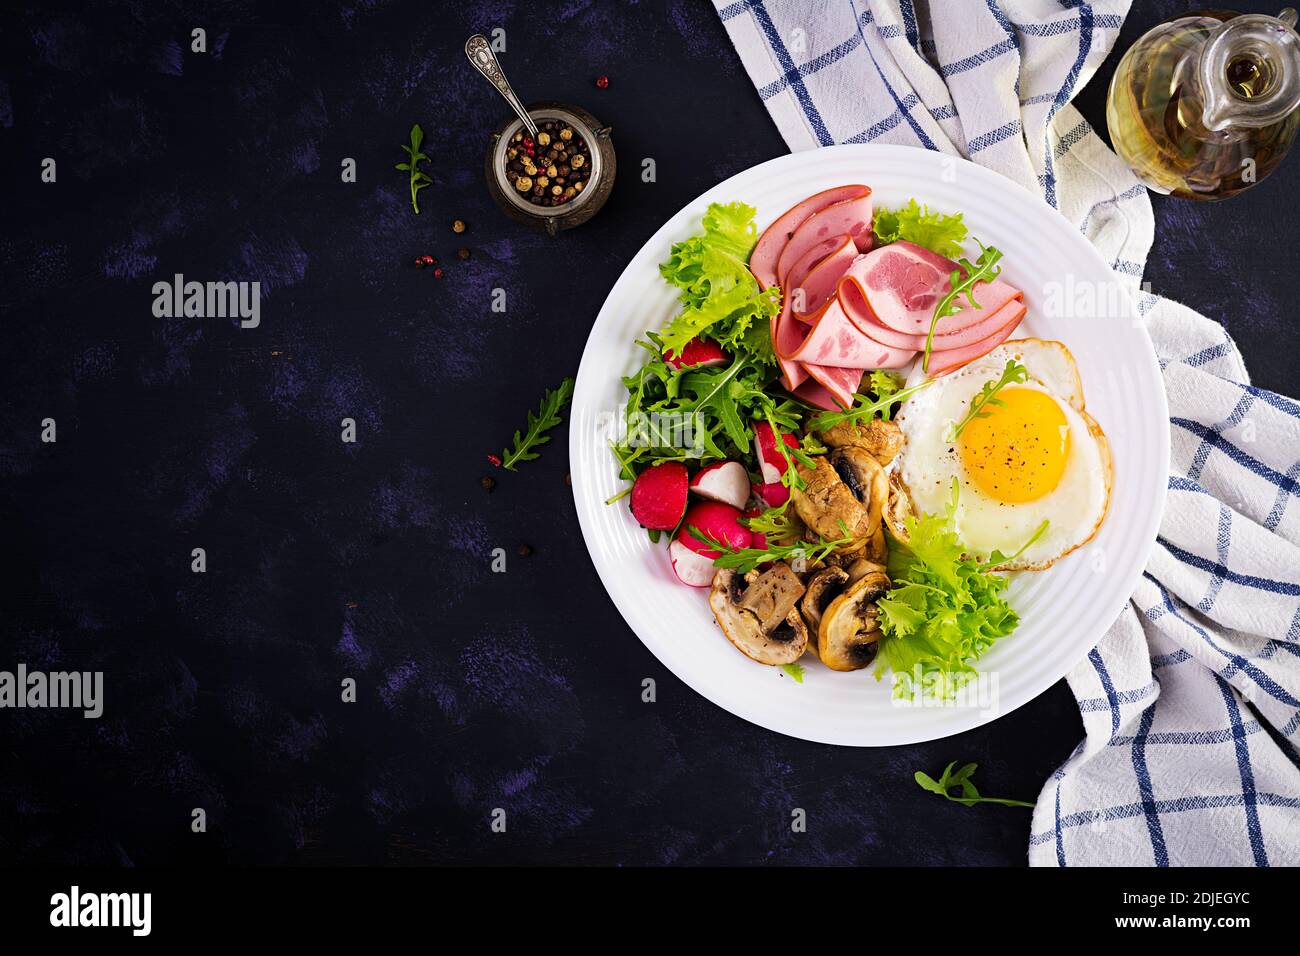 English  breakfast - fried eggs, ham, fried mushrooms, radish and arugula. ketogenic, keto  food. Top view, overhead, copy spac Stock Photo